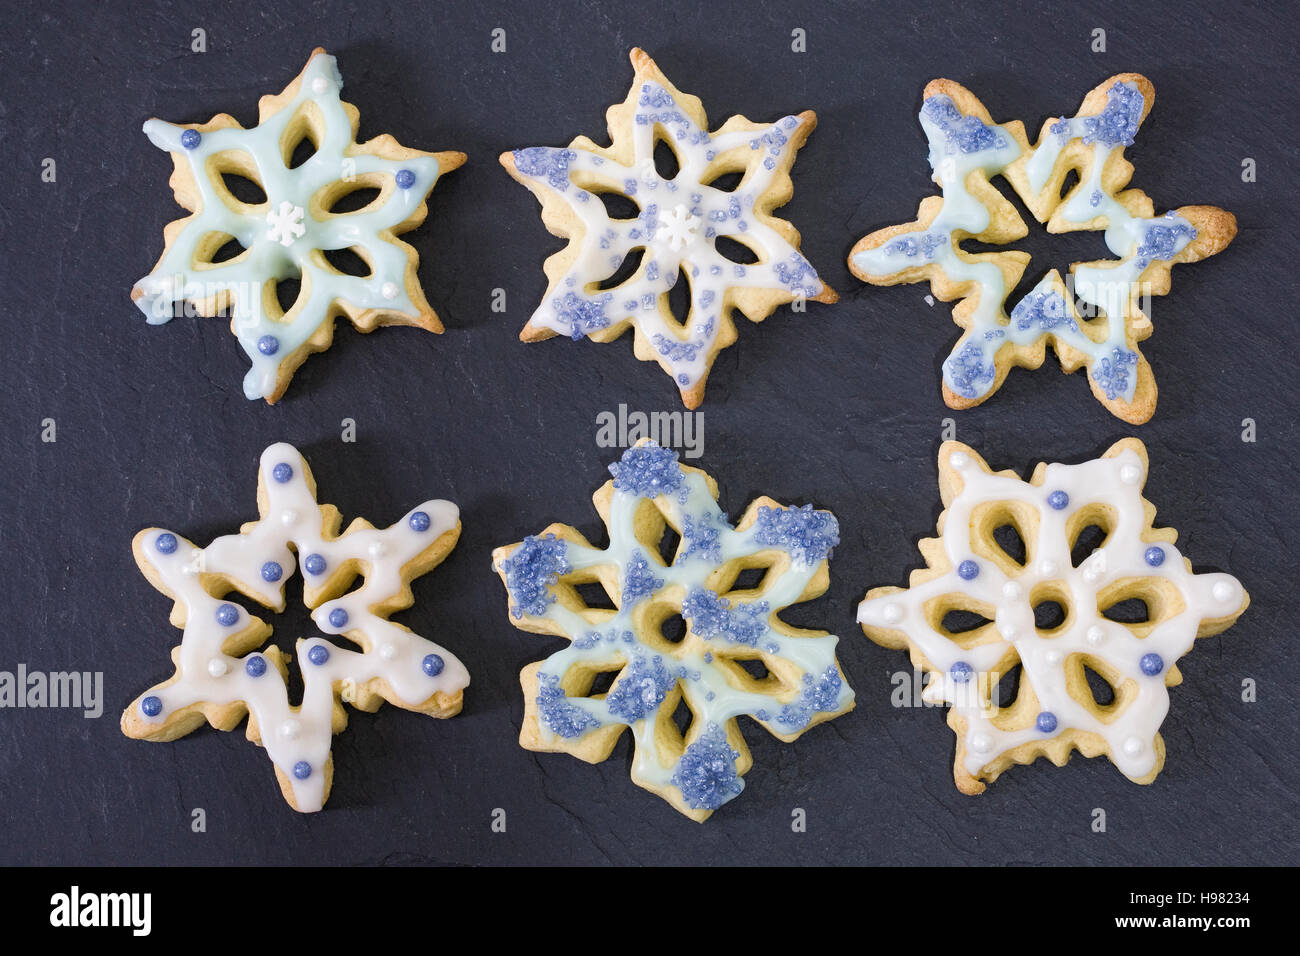 https://c8.alamy.com/comp/H98234/homemade-snowflake-cookies-on-slate-H98234.jpg